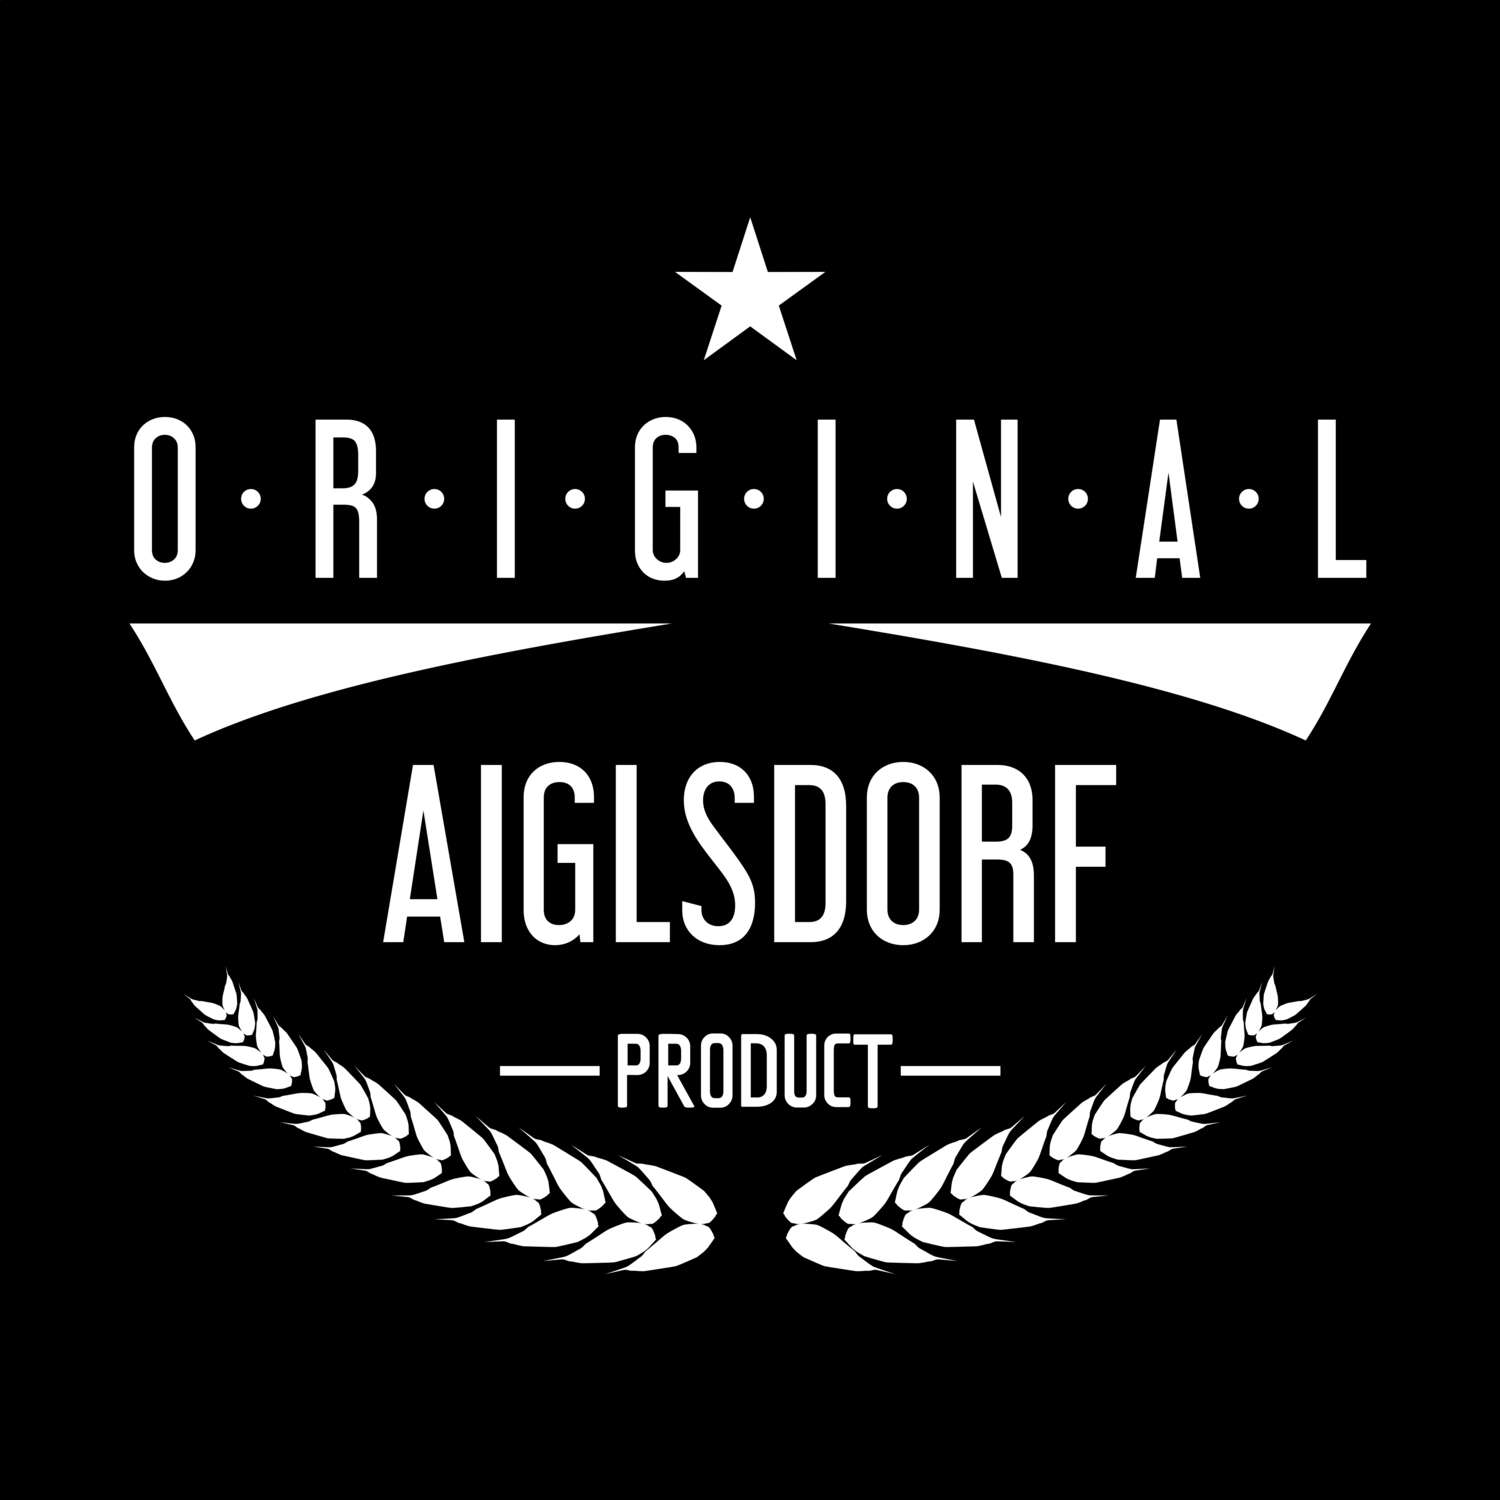 Aiglsdorf T-Shirt »Original Product«